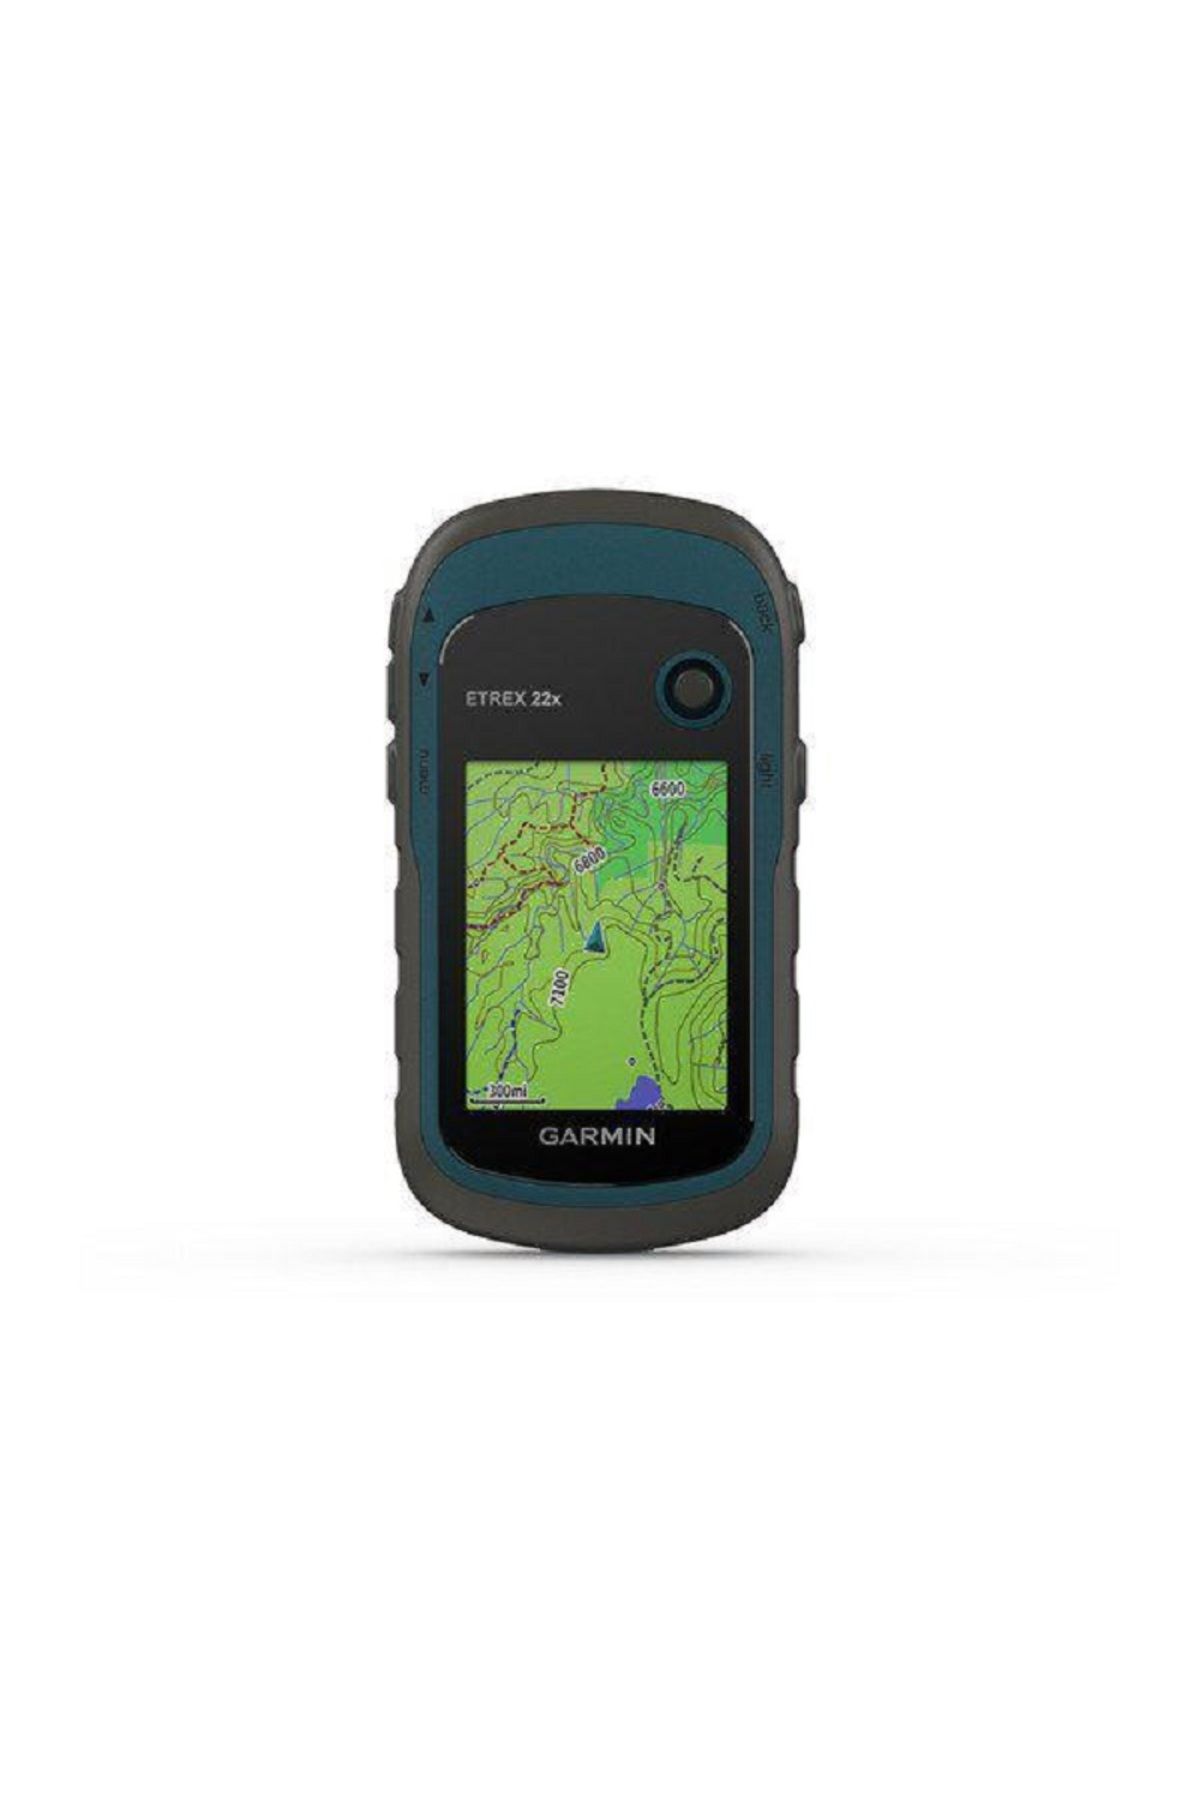 Garmin eTrex 22x El tipi GPS, Tarla Alan Arazi Ölçer